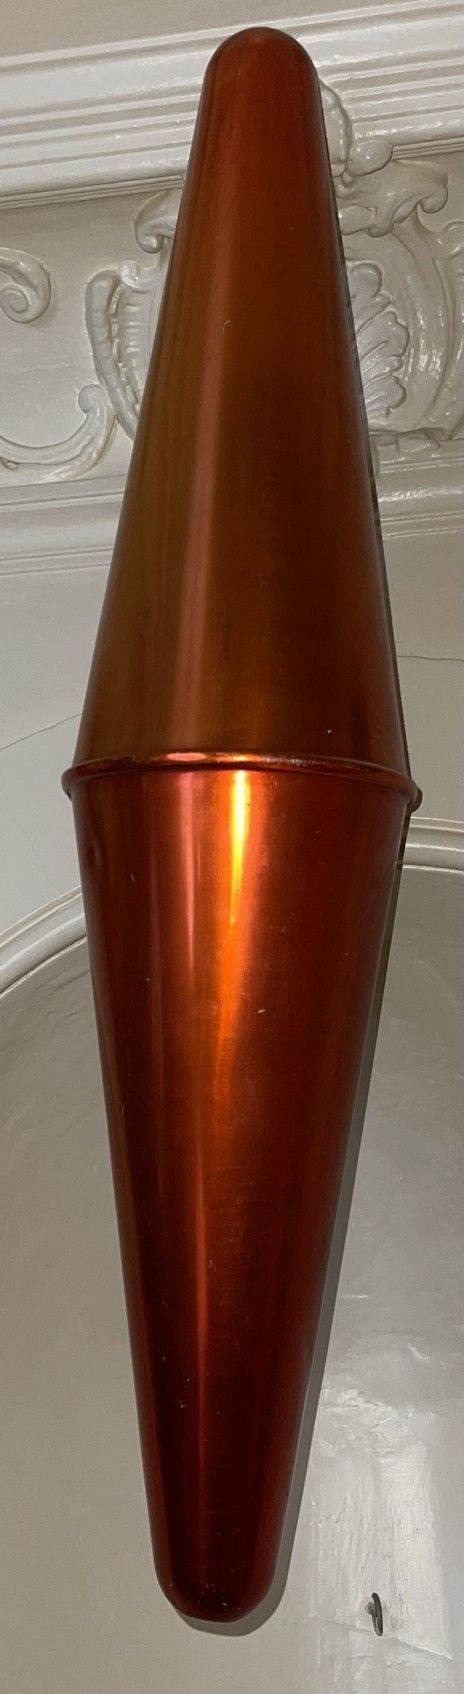 Null Carota di tabacco in lamiera verniciata

Moderno

H.: 79 cm (urti)